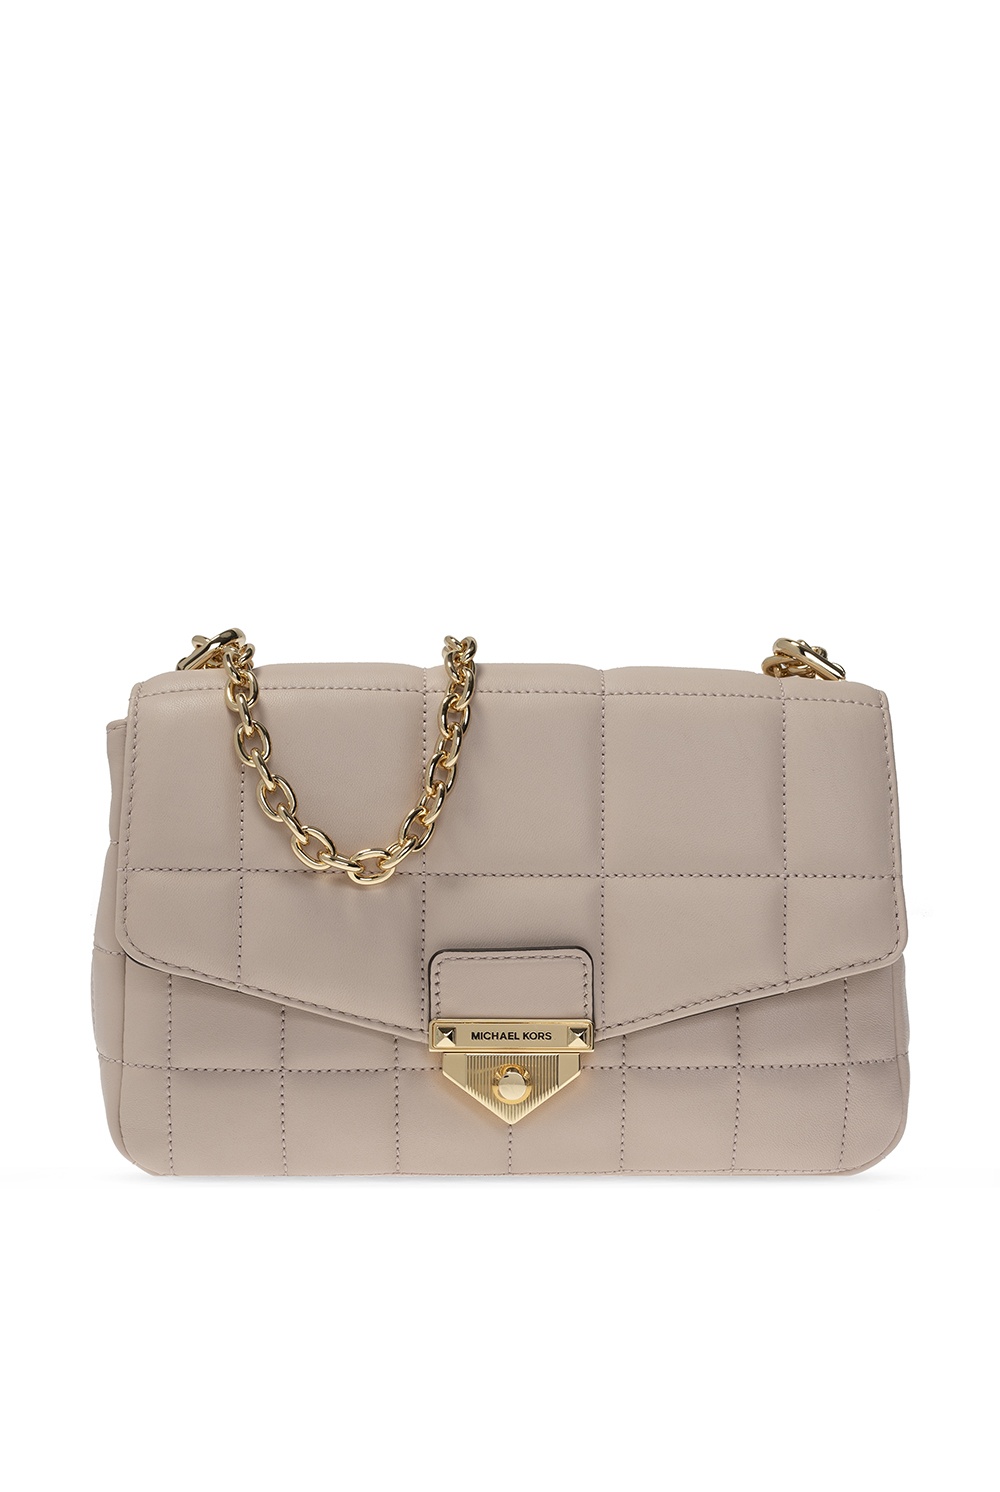 IetpShops | Michael Michael Kors 'Soho' shoulder bag | Chanel Pre-Owned  Denim Basket Chain Shoulder Bag | Women's Bags